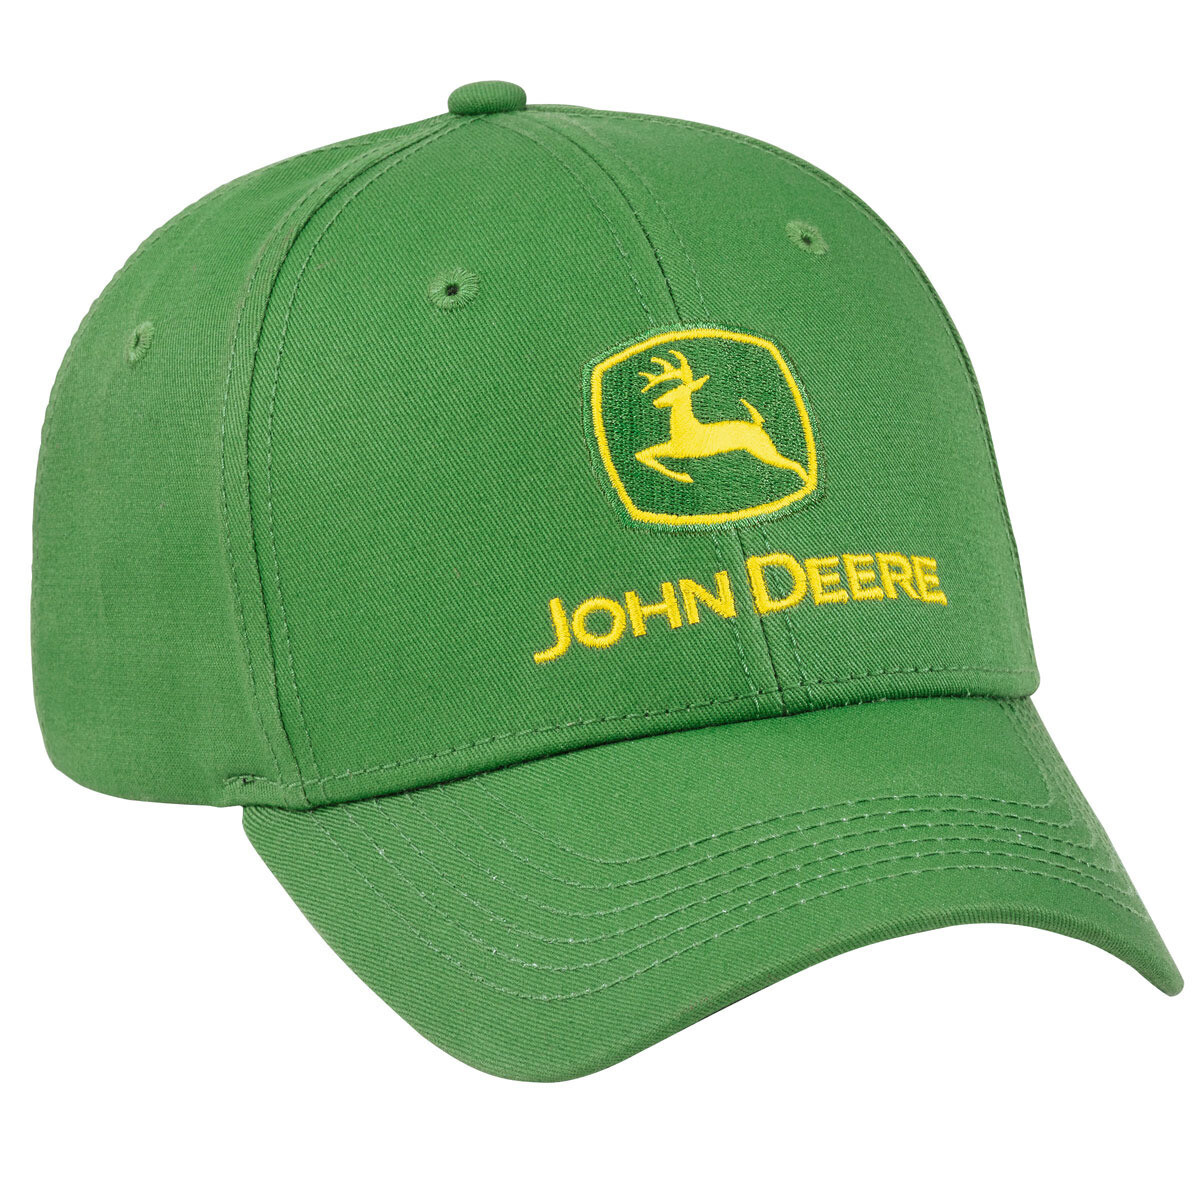 Green Trademark John Deere Hat